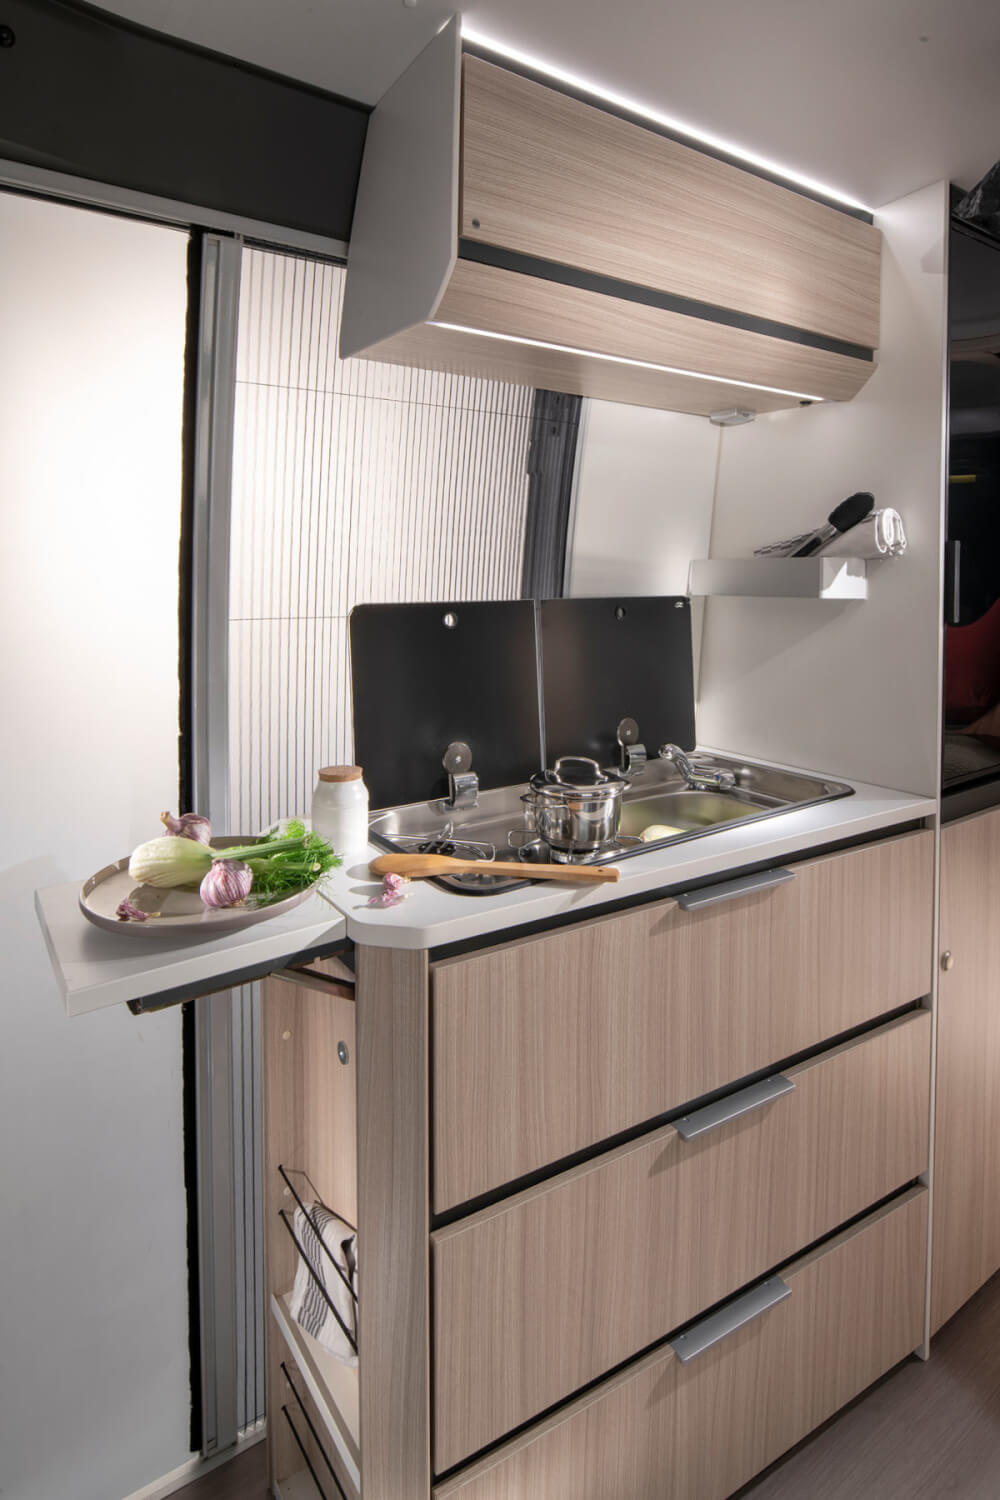 Adria Twin Axess 640 SL (Fiat) Kastenwagen 2021 Küche